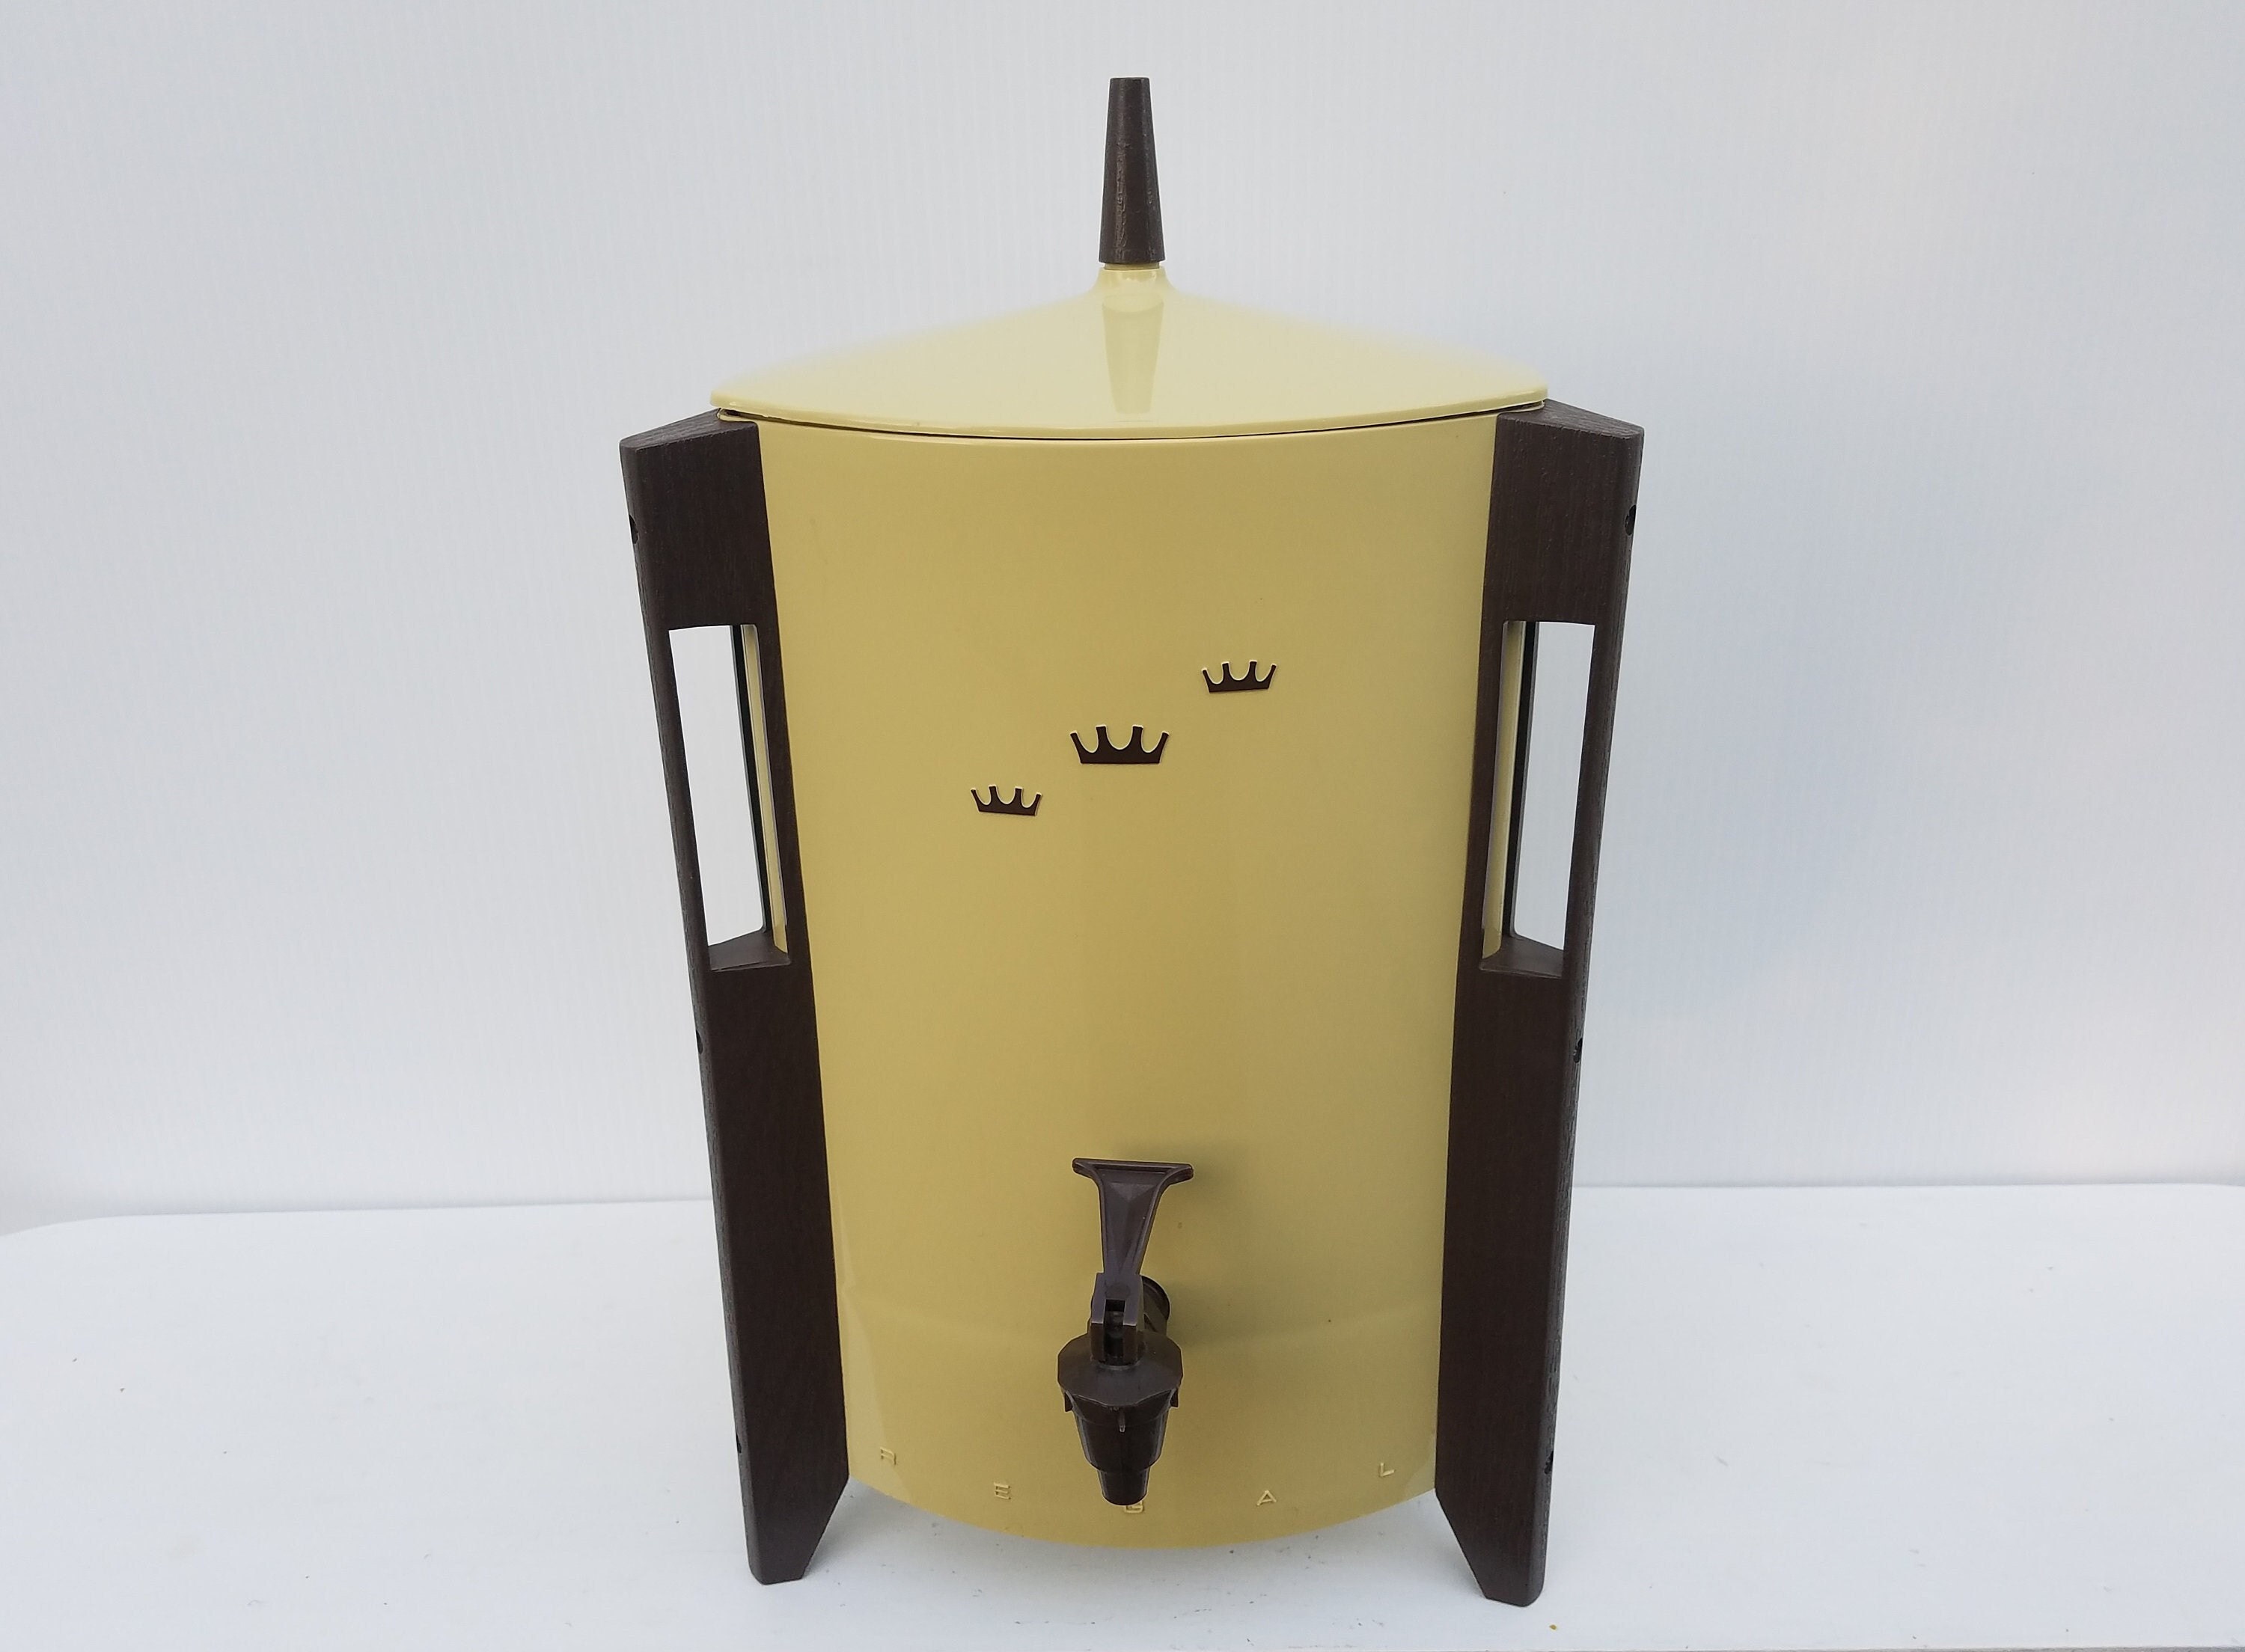 Vintage Regal Ware Poly Perk Automatic Percolator Urn 10-20 